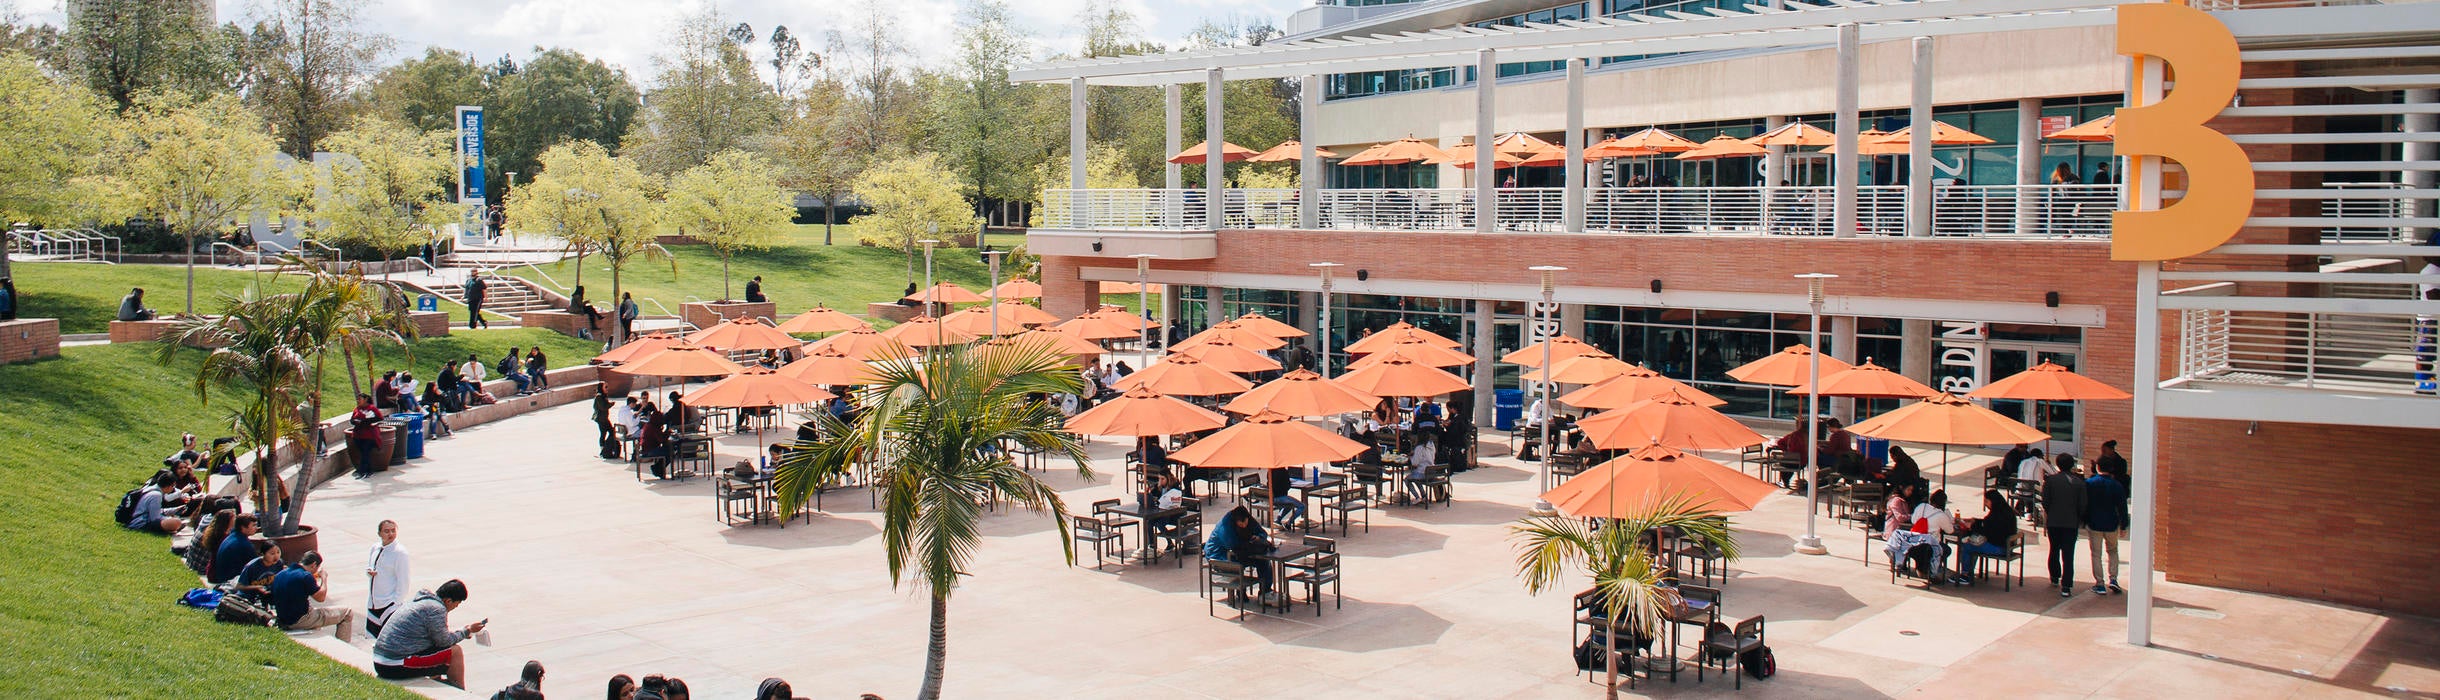 UCR Hub Plaza with Orange Umbrellas